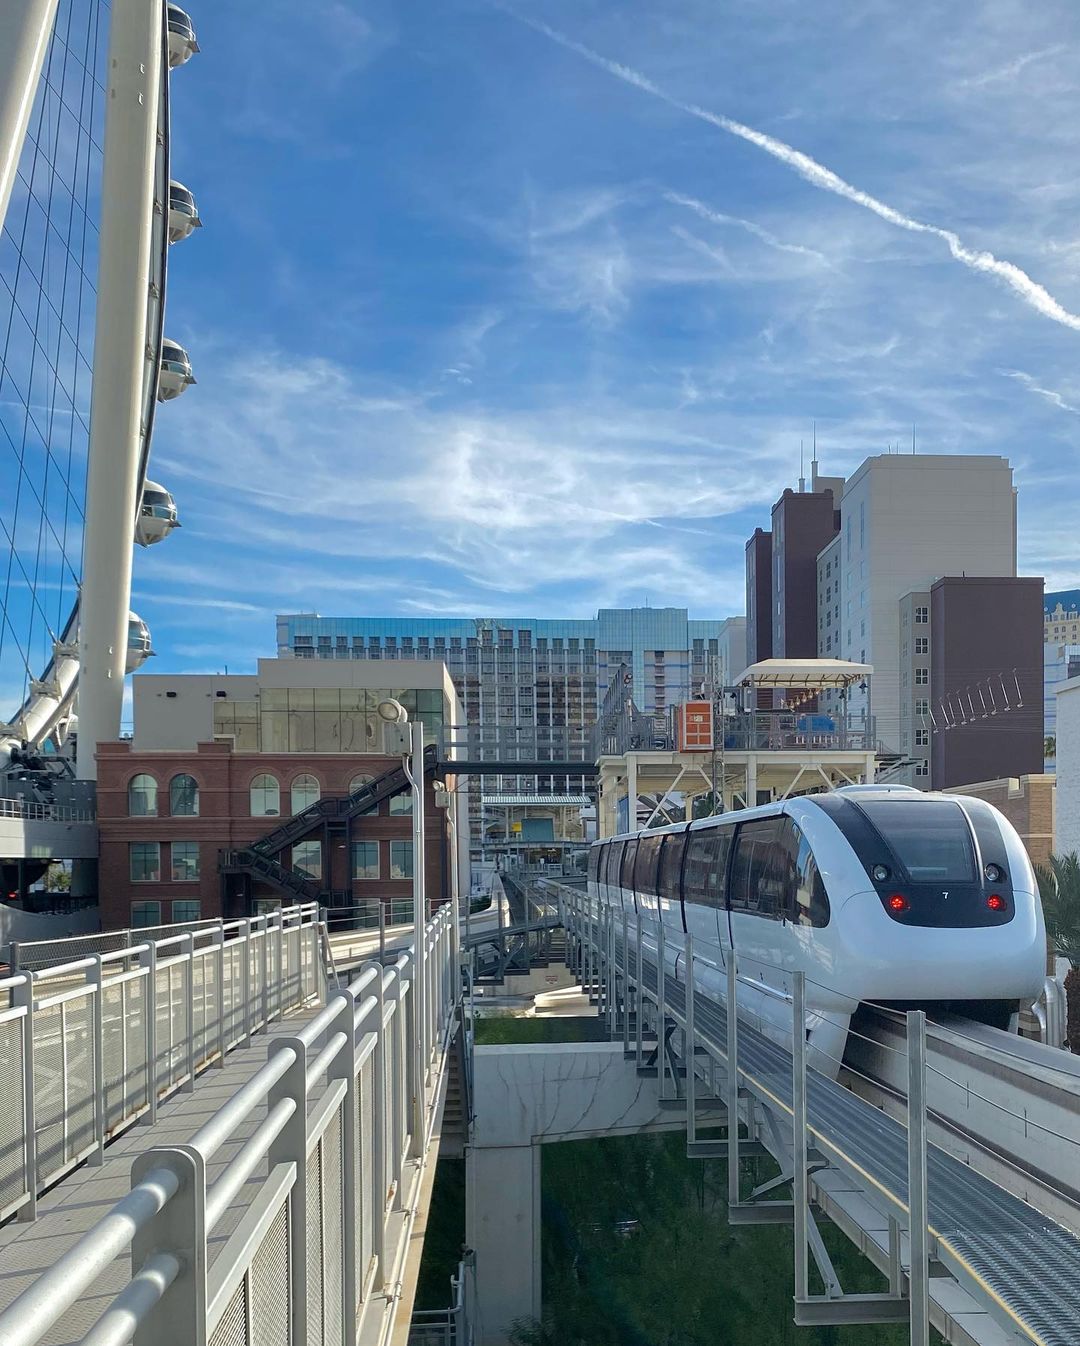 Las Vegas monorail traveling through the Las Vegas strip. Photo by @ jbtrainman2